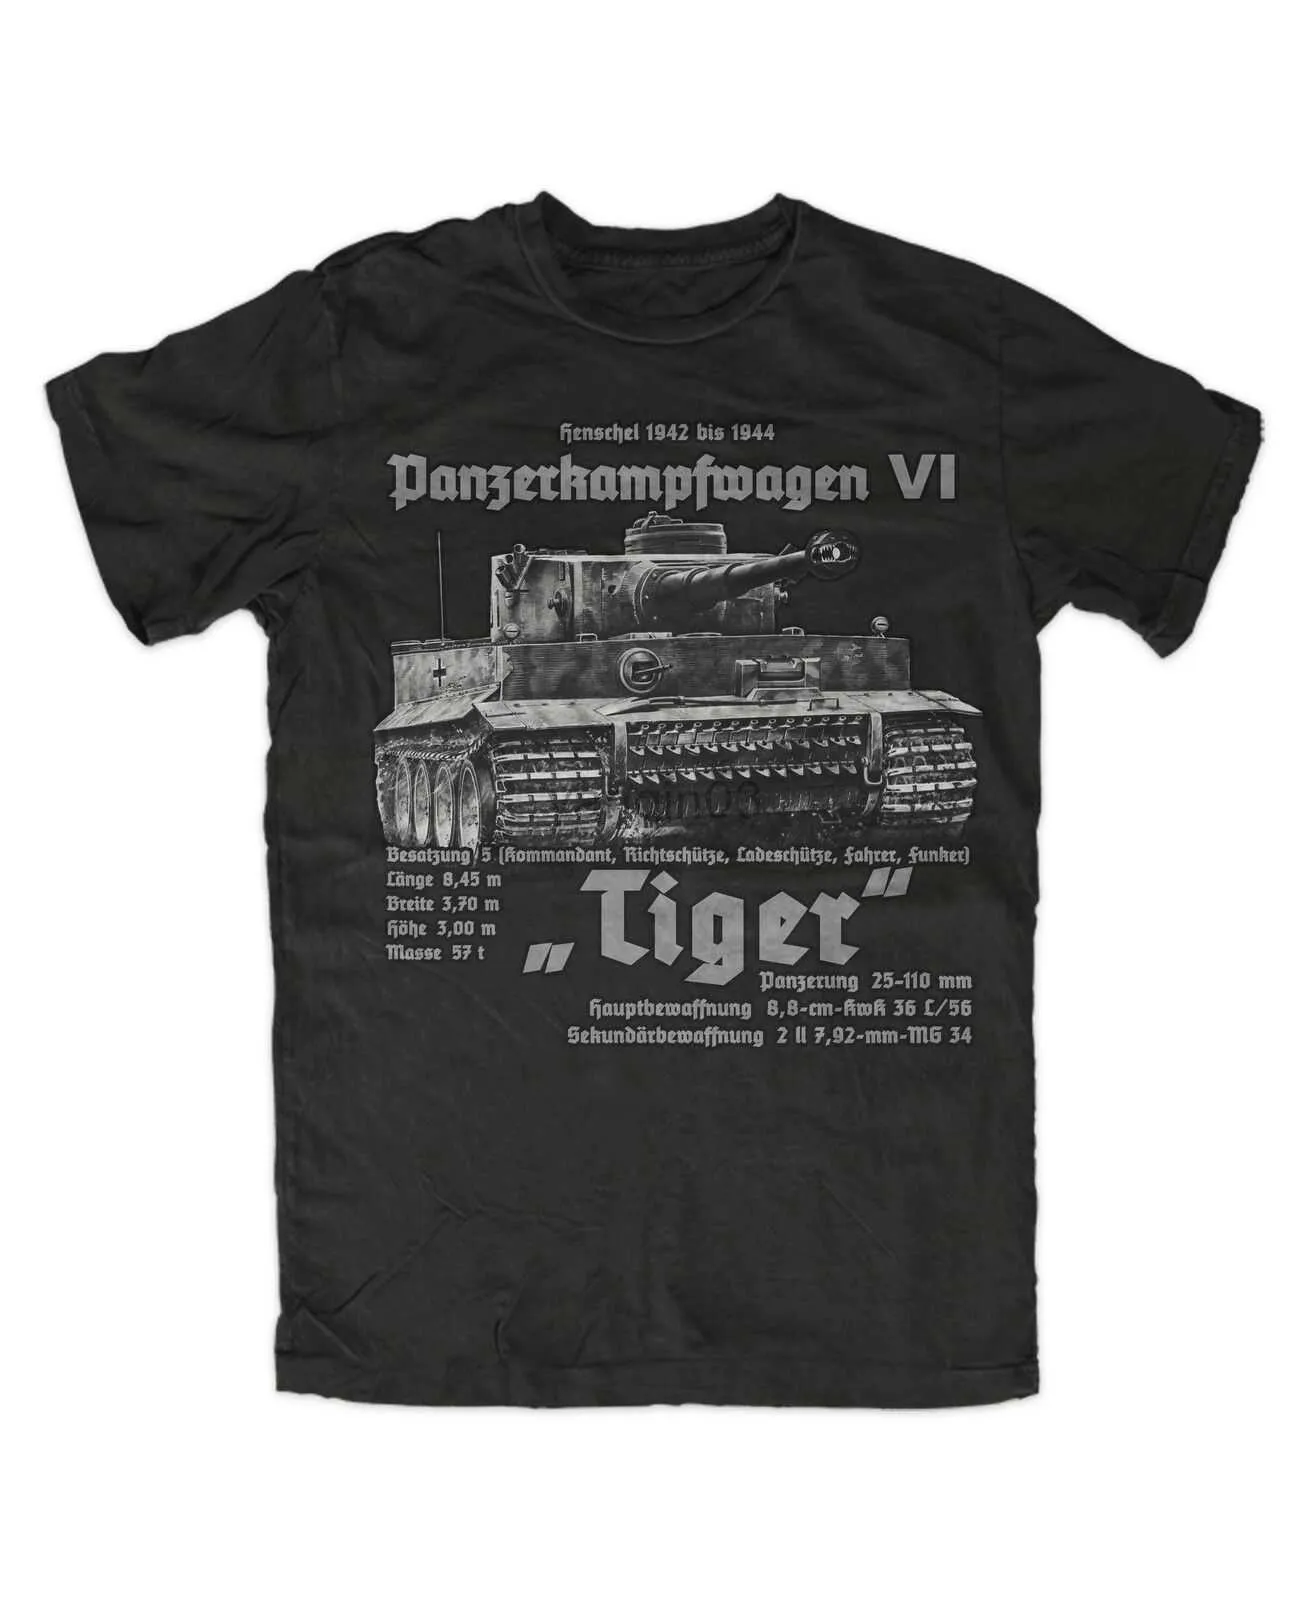 Men's T-Shirts WW2 Wehrmacht Tank Force King Tiger Tank T-Shirt. Summer Cotton Short Sleeve O-Neck Mens T Shirt New S-3XL J230602